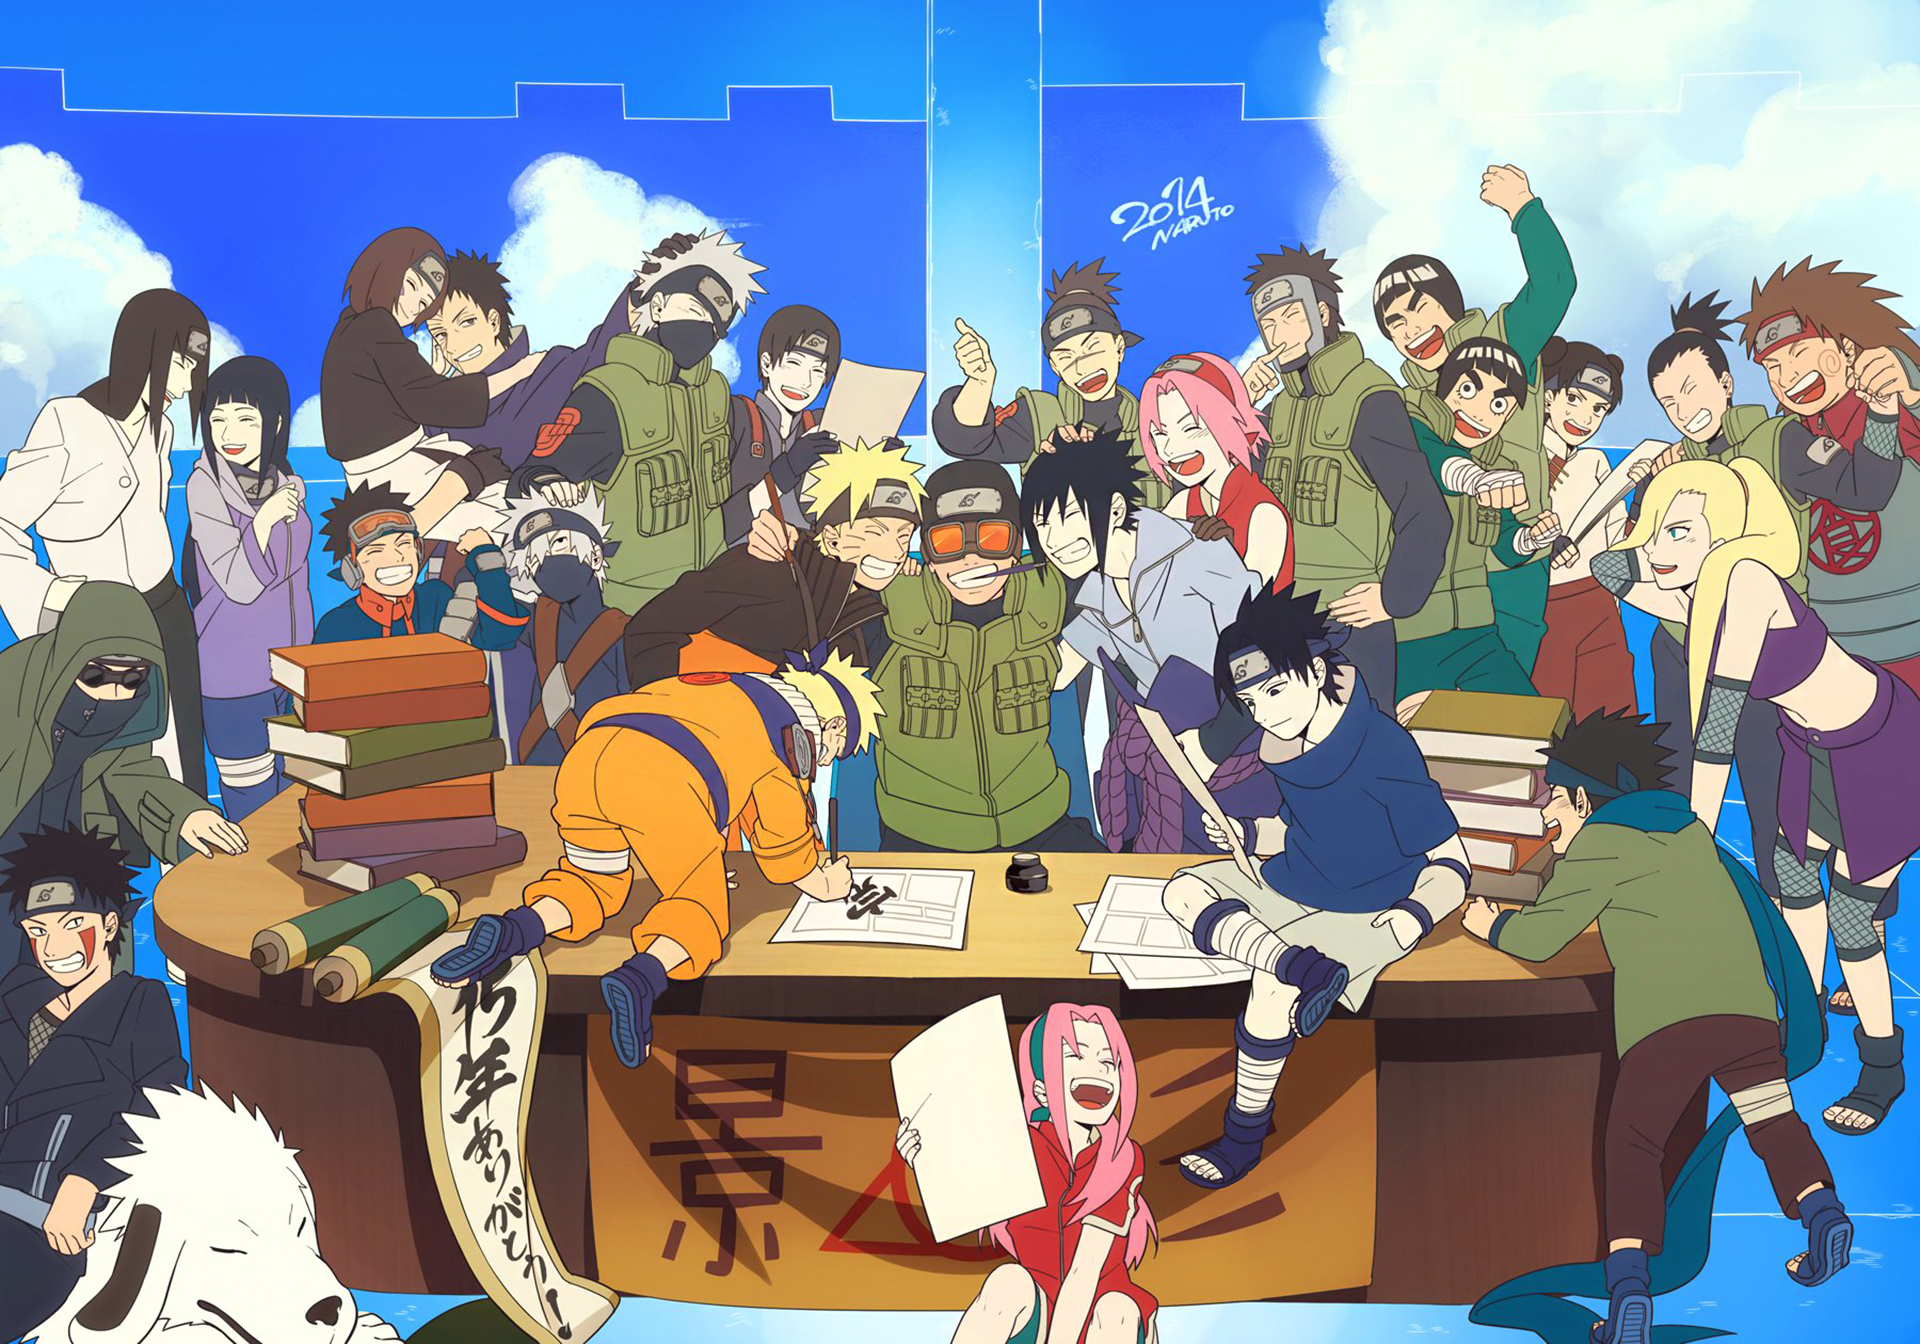 konoha wallpaper,dibujos animados,grupo social,comunidad,dibujos animados,anime